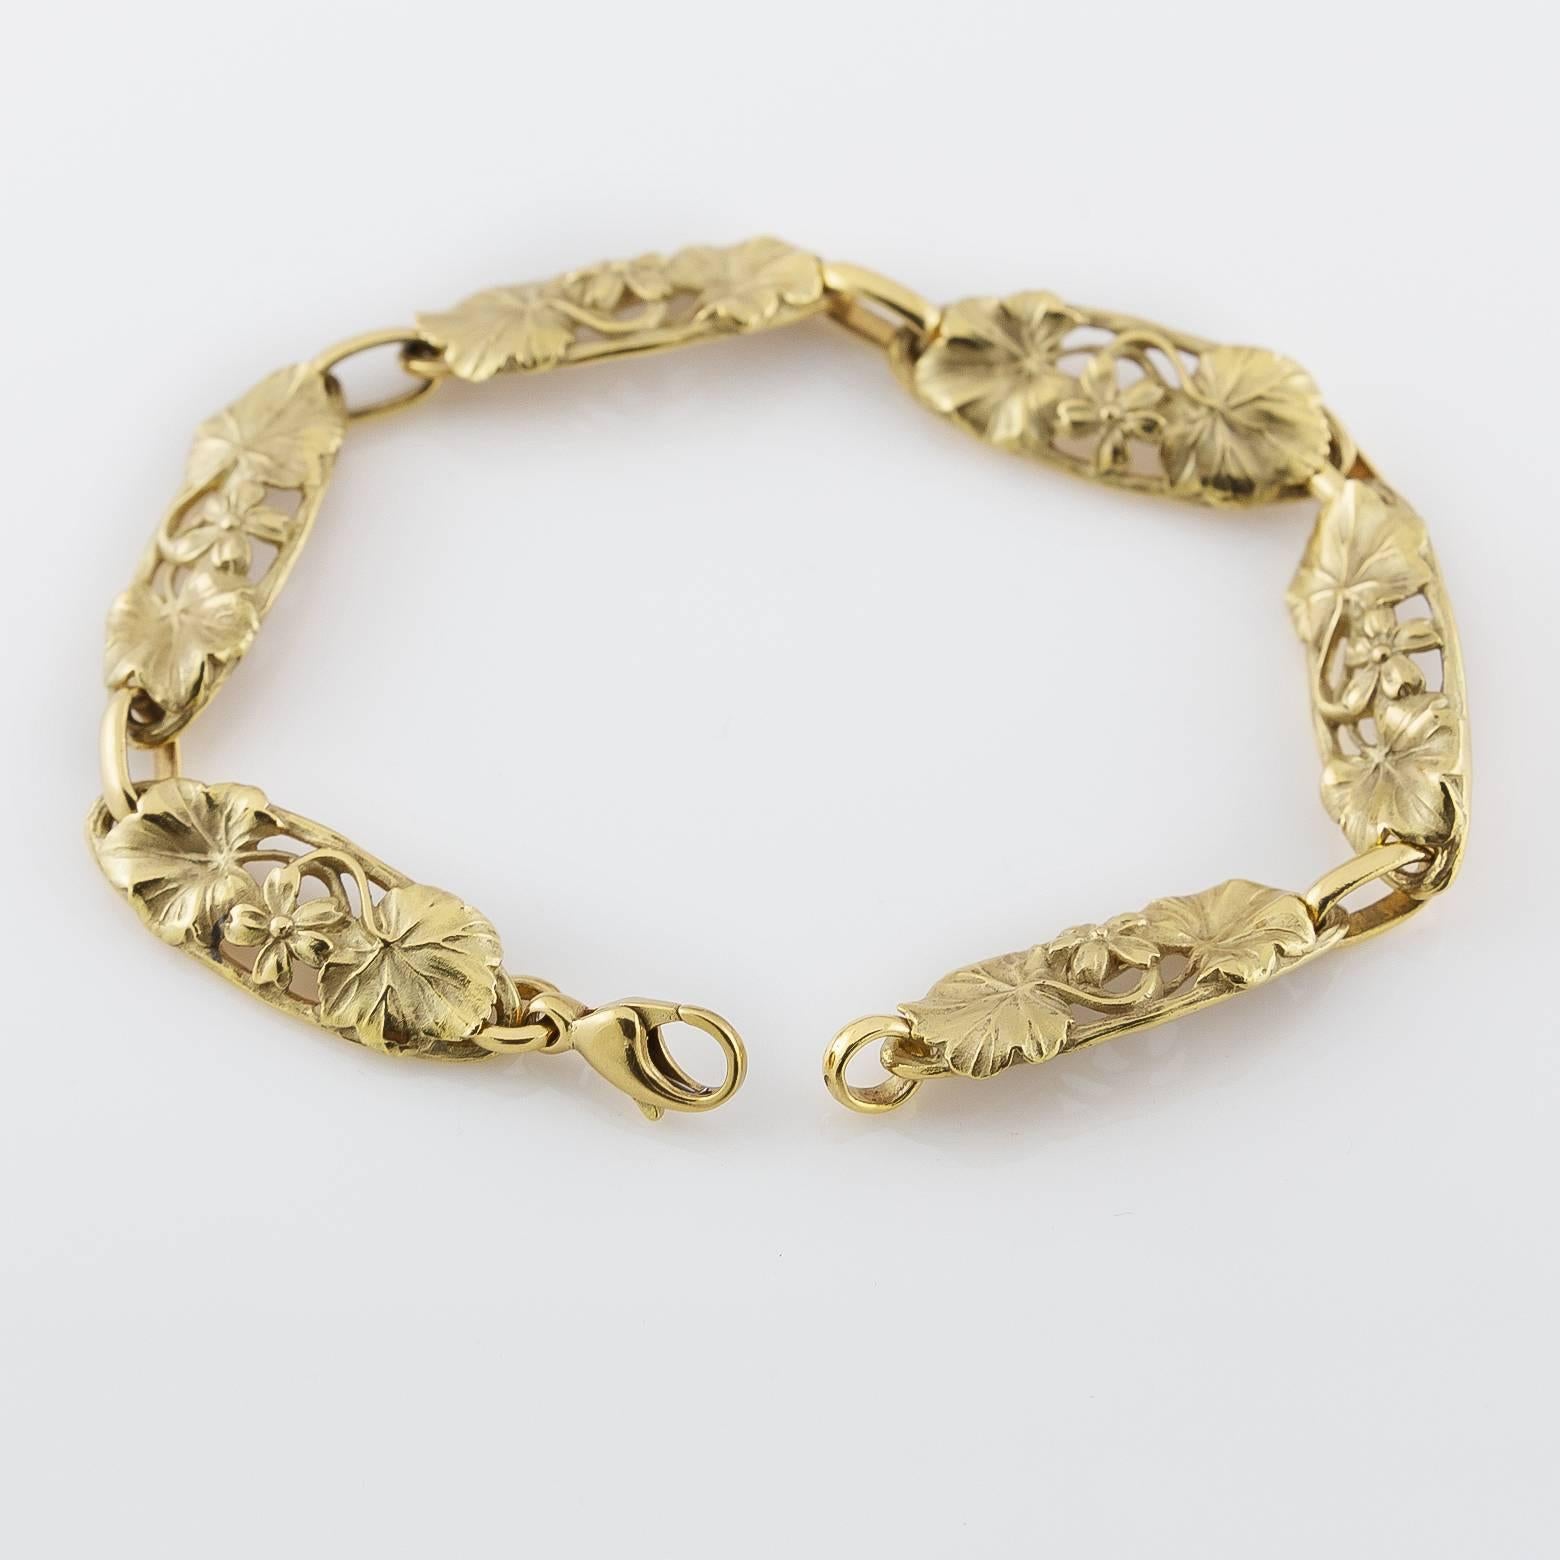 Women's Arnould Art Nouveau 18K Gold Link Bracelet Re-Edition with Flowers and Vines